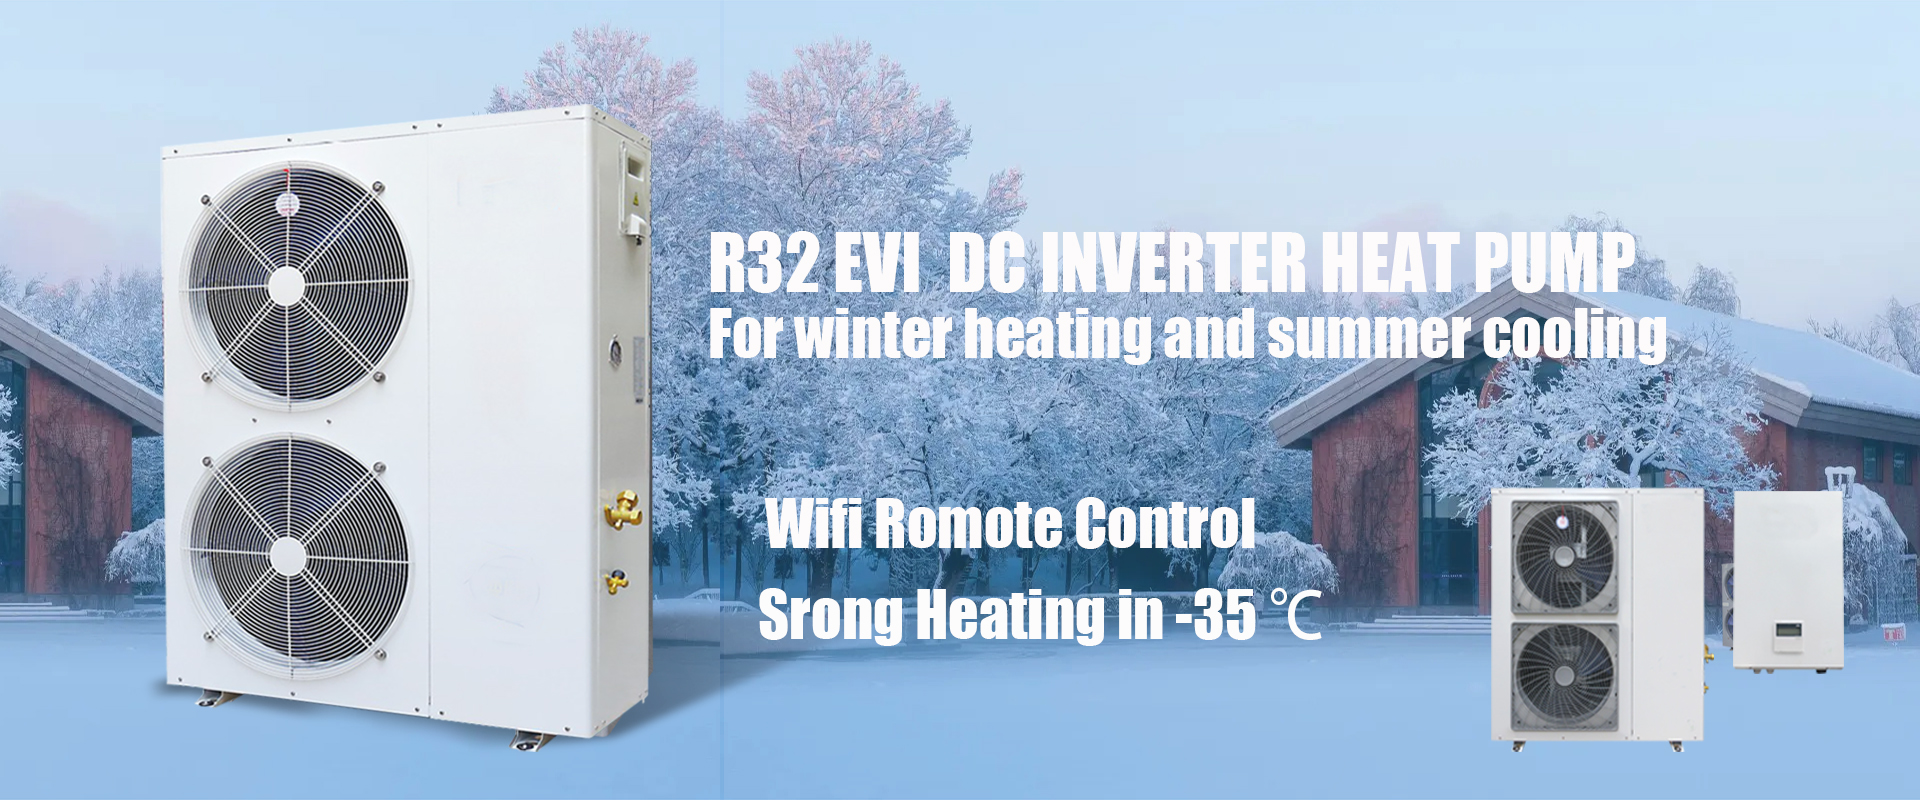 SolarShine R32 evi dc inverter heat pump